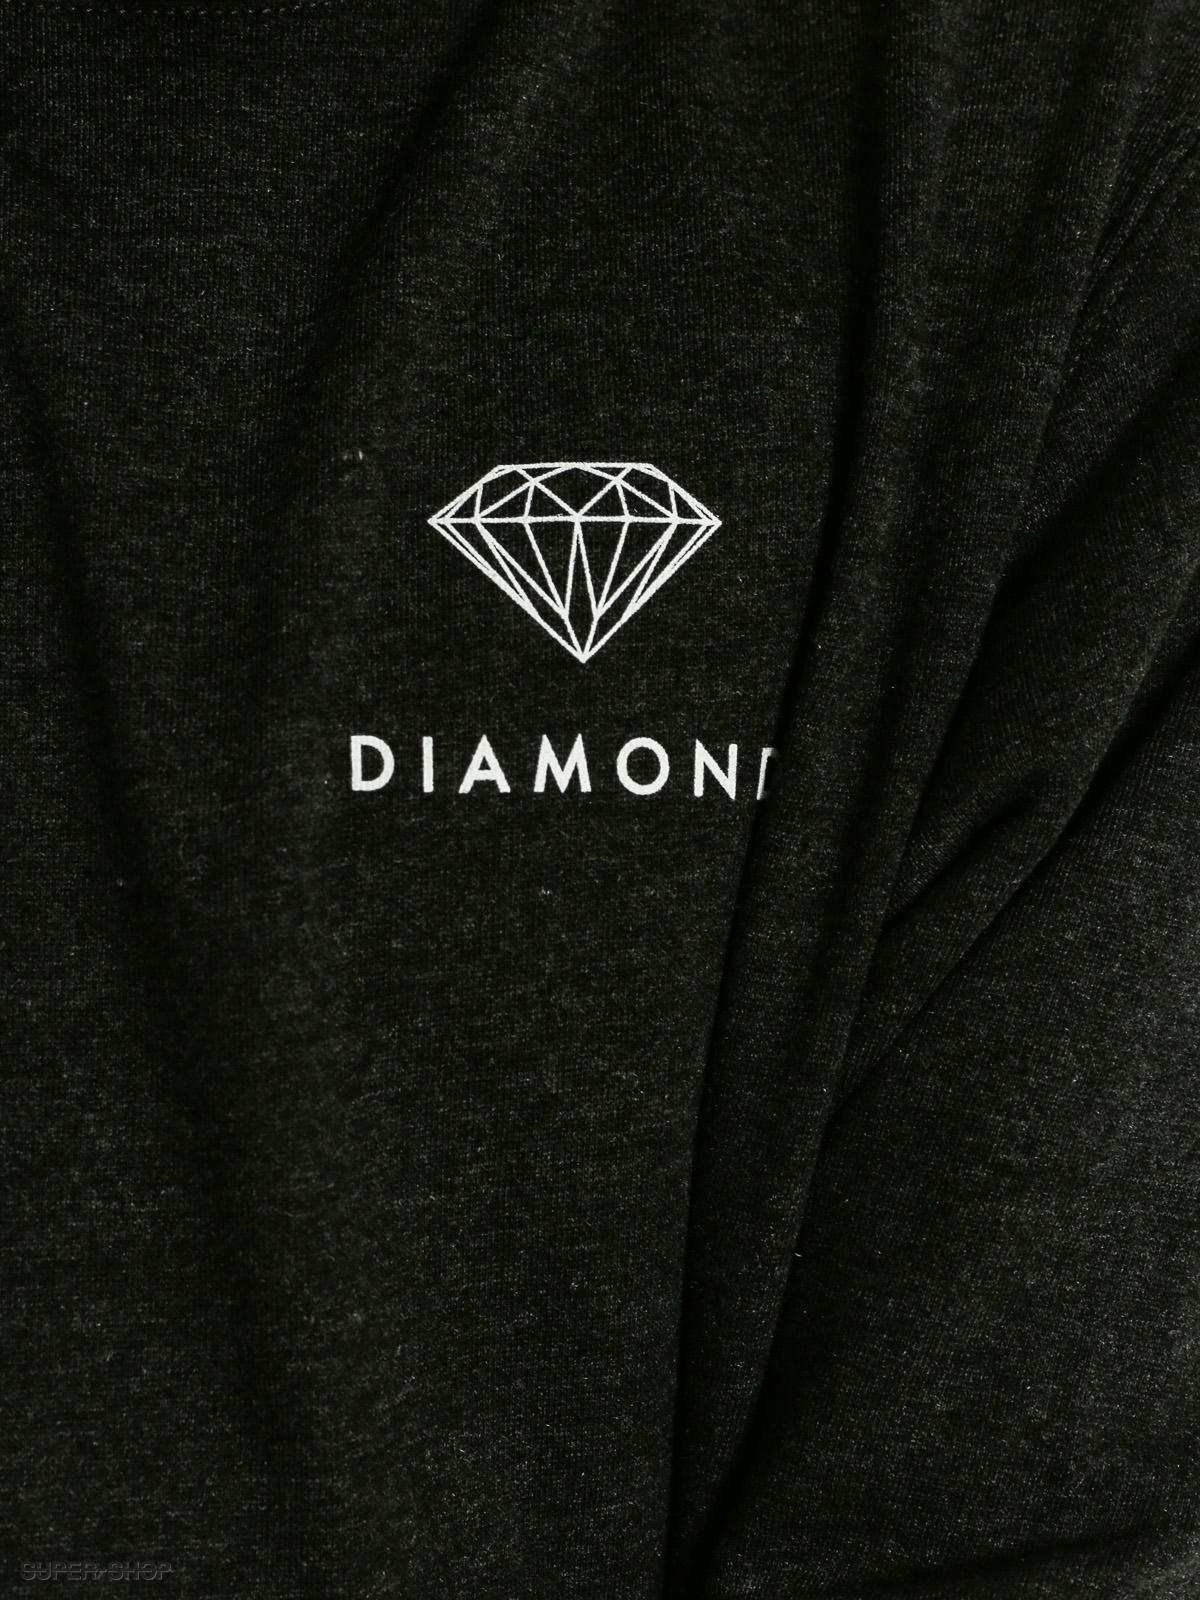 diamond brand sweatshirt